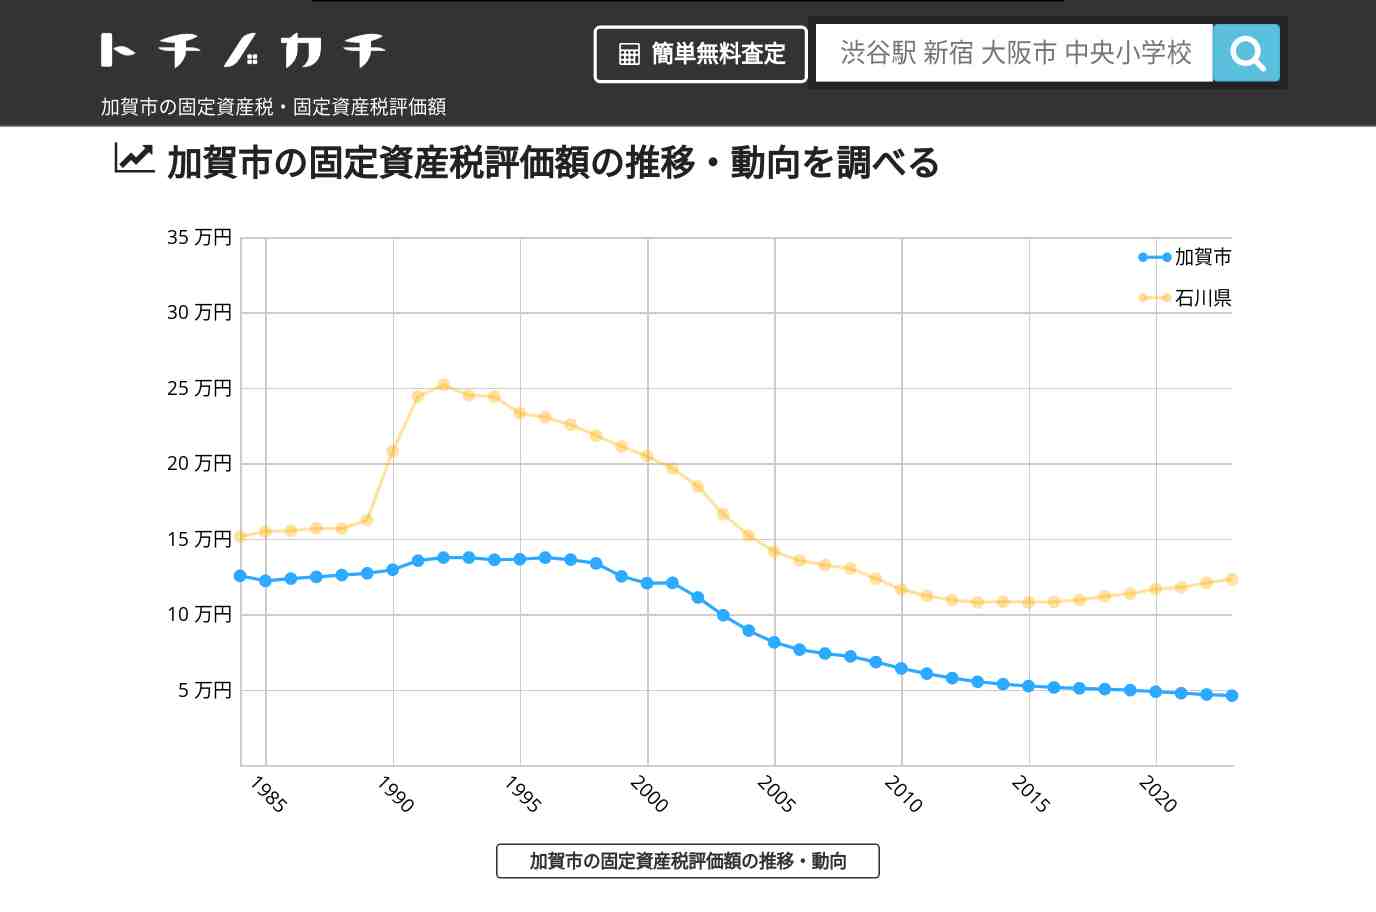 河南小学校(石川県 加賀市)周辺の固定資産税・固定資産税評価額 | トチノカチ